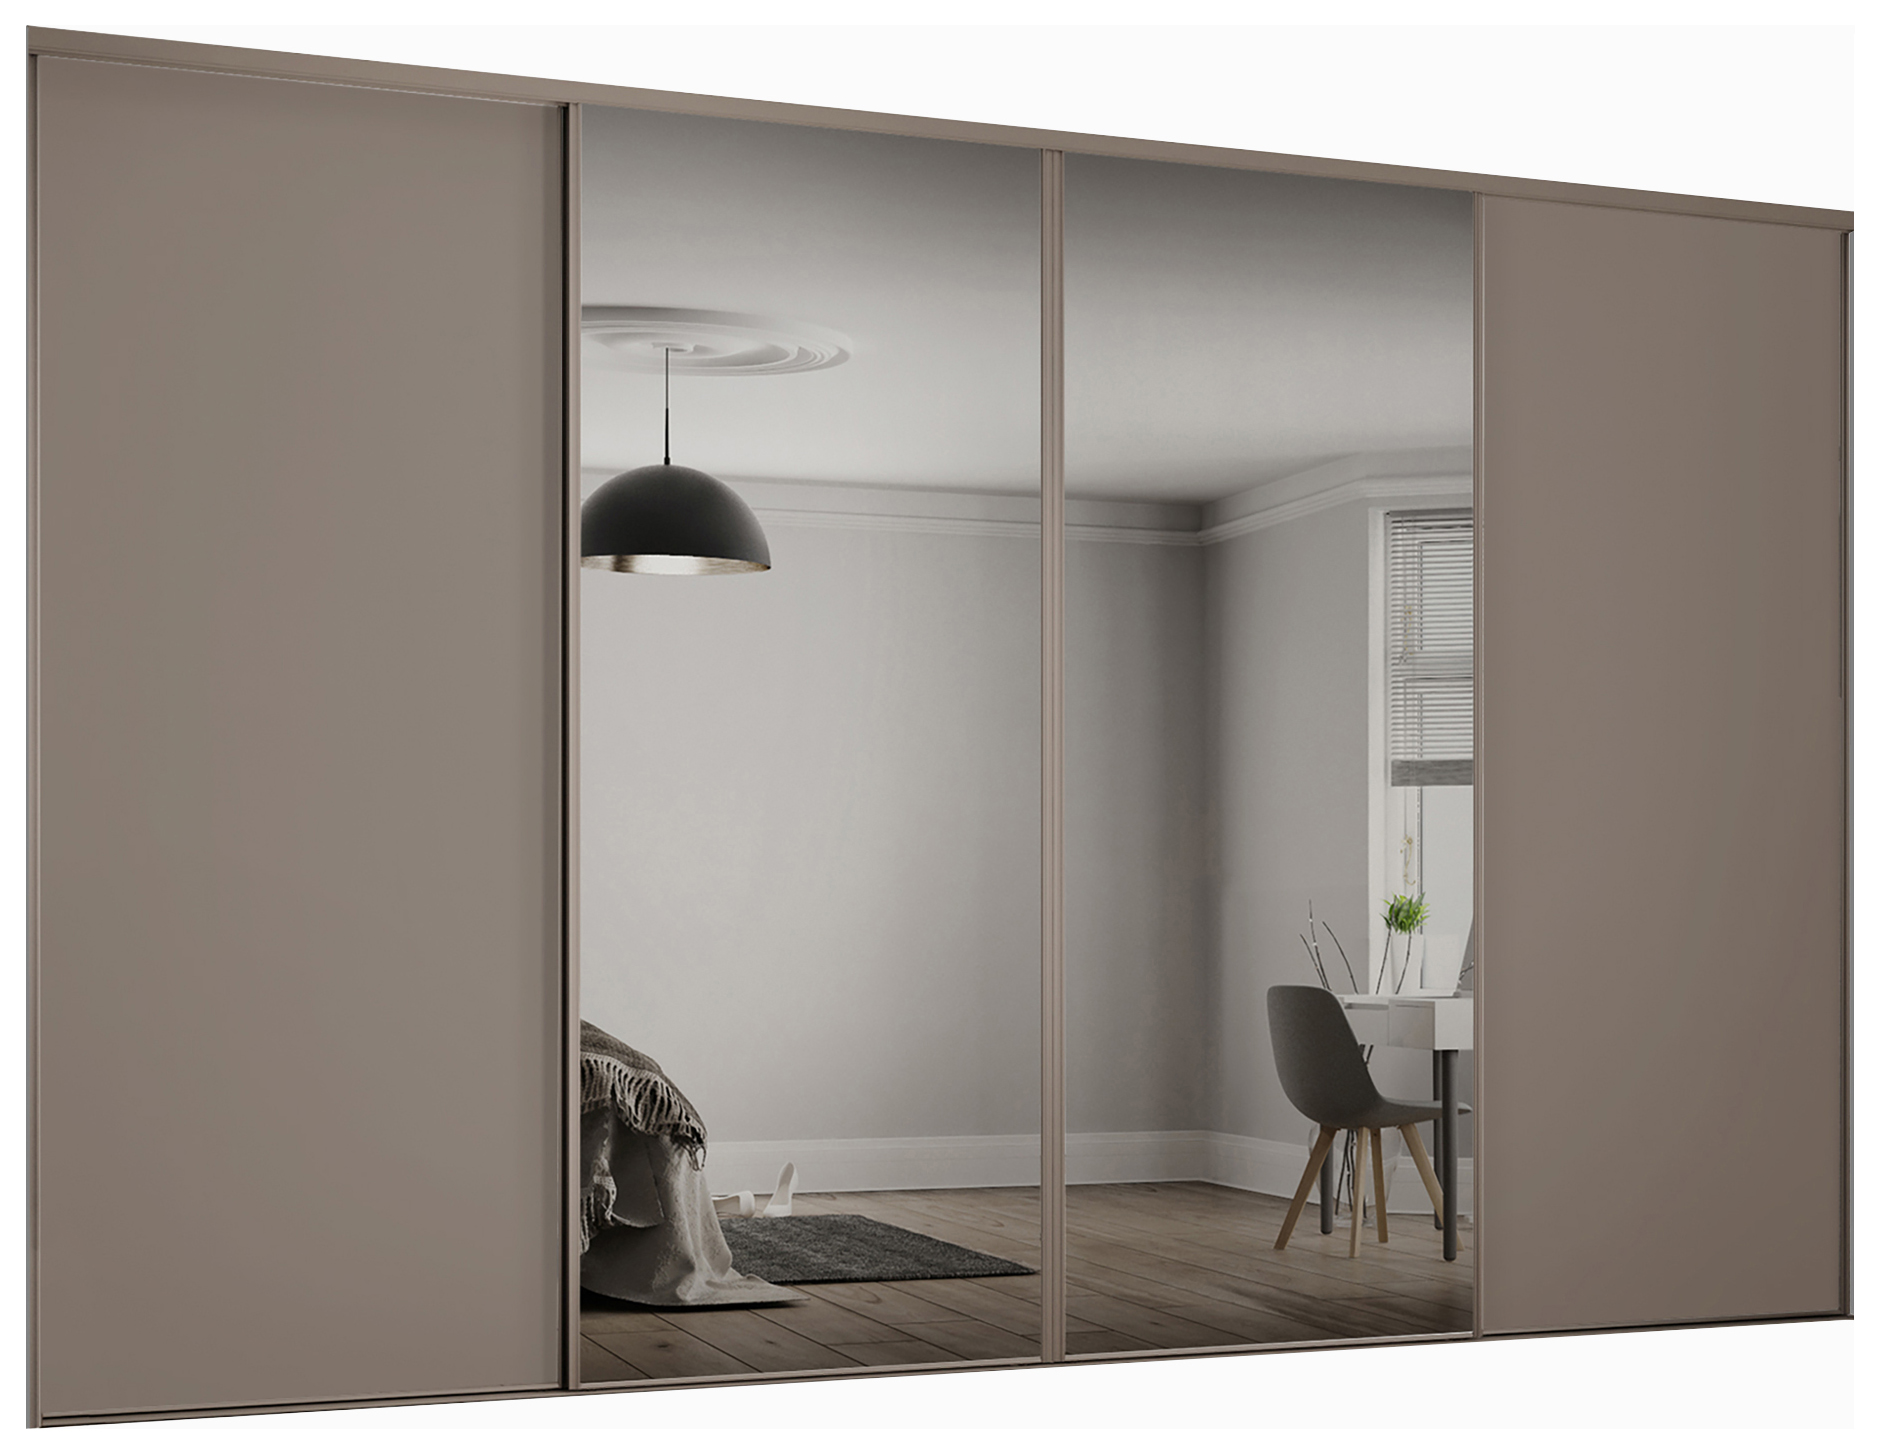 Spacepro Heritage 4 Wardrobe Door Kit Stone Grey Framed- 2x 1 Panel Shaker & 2x1 Panel Mirror